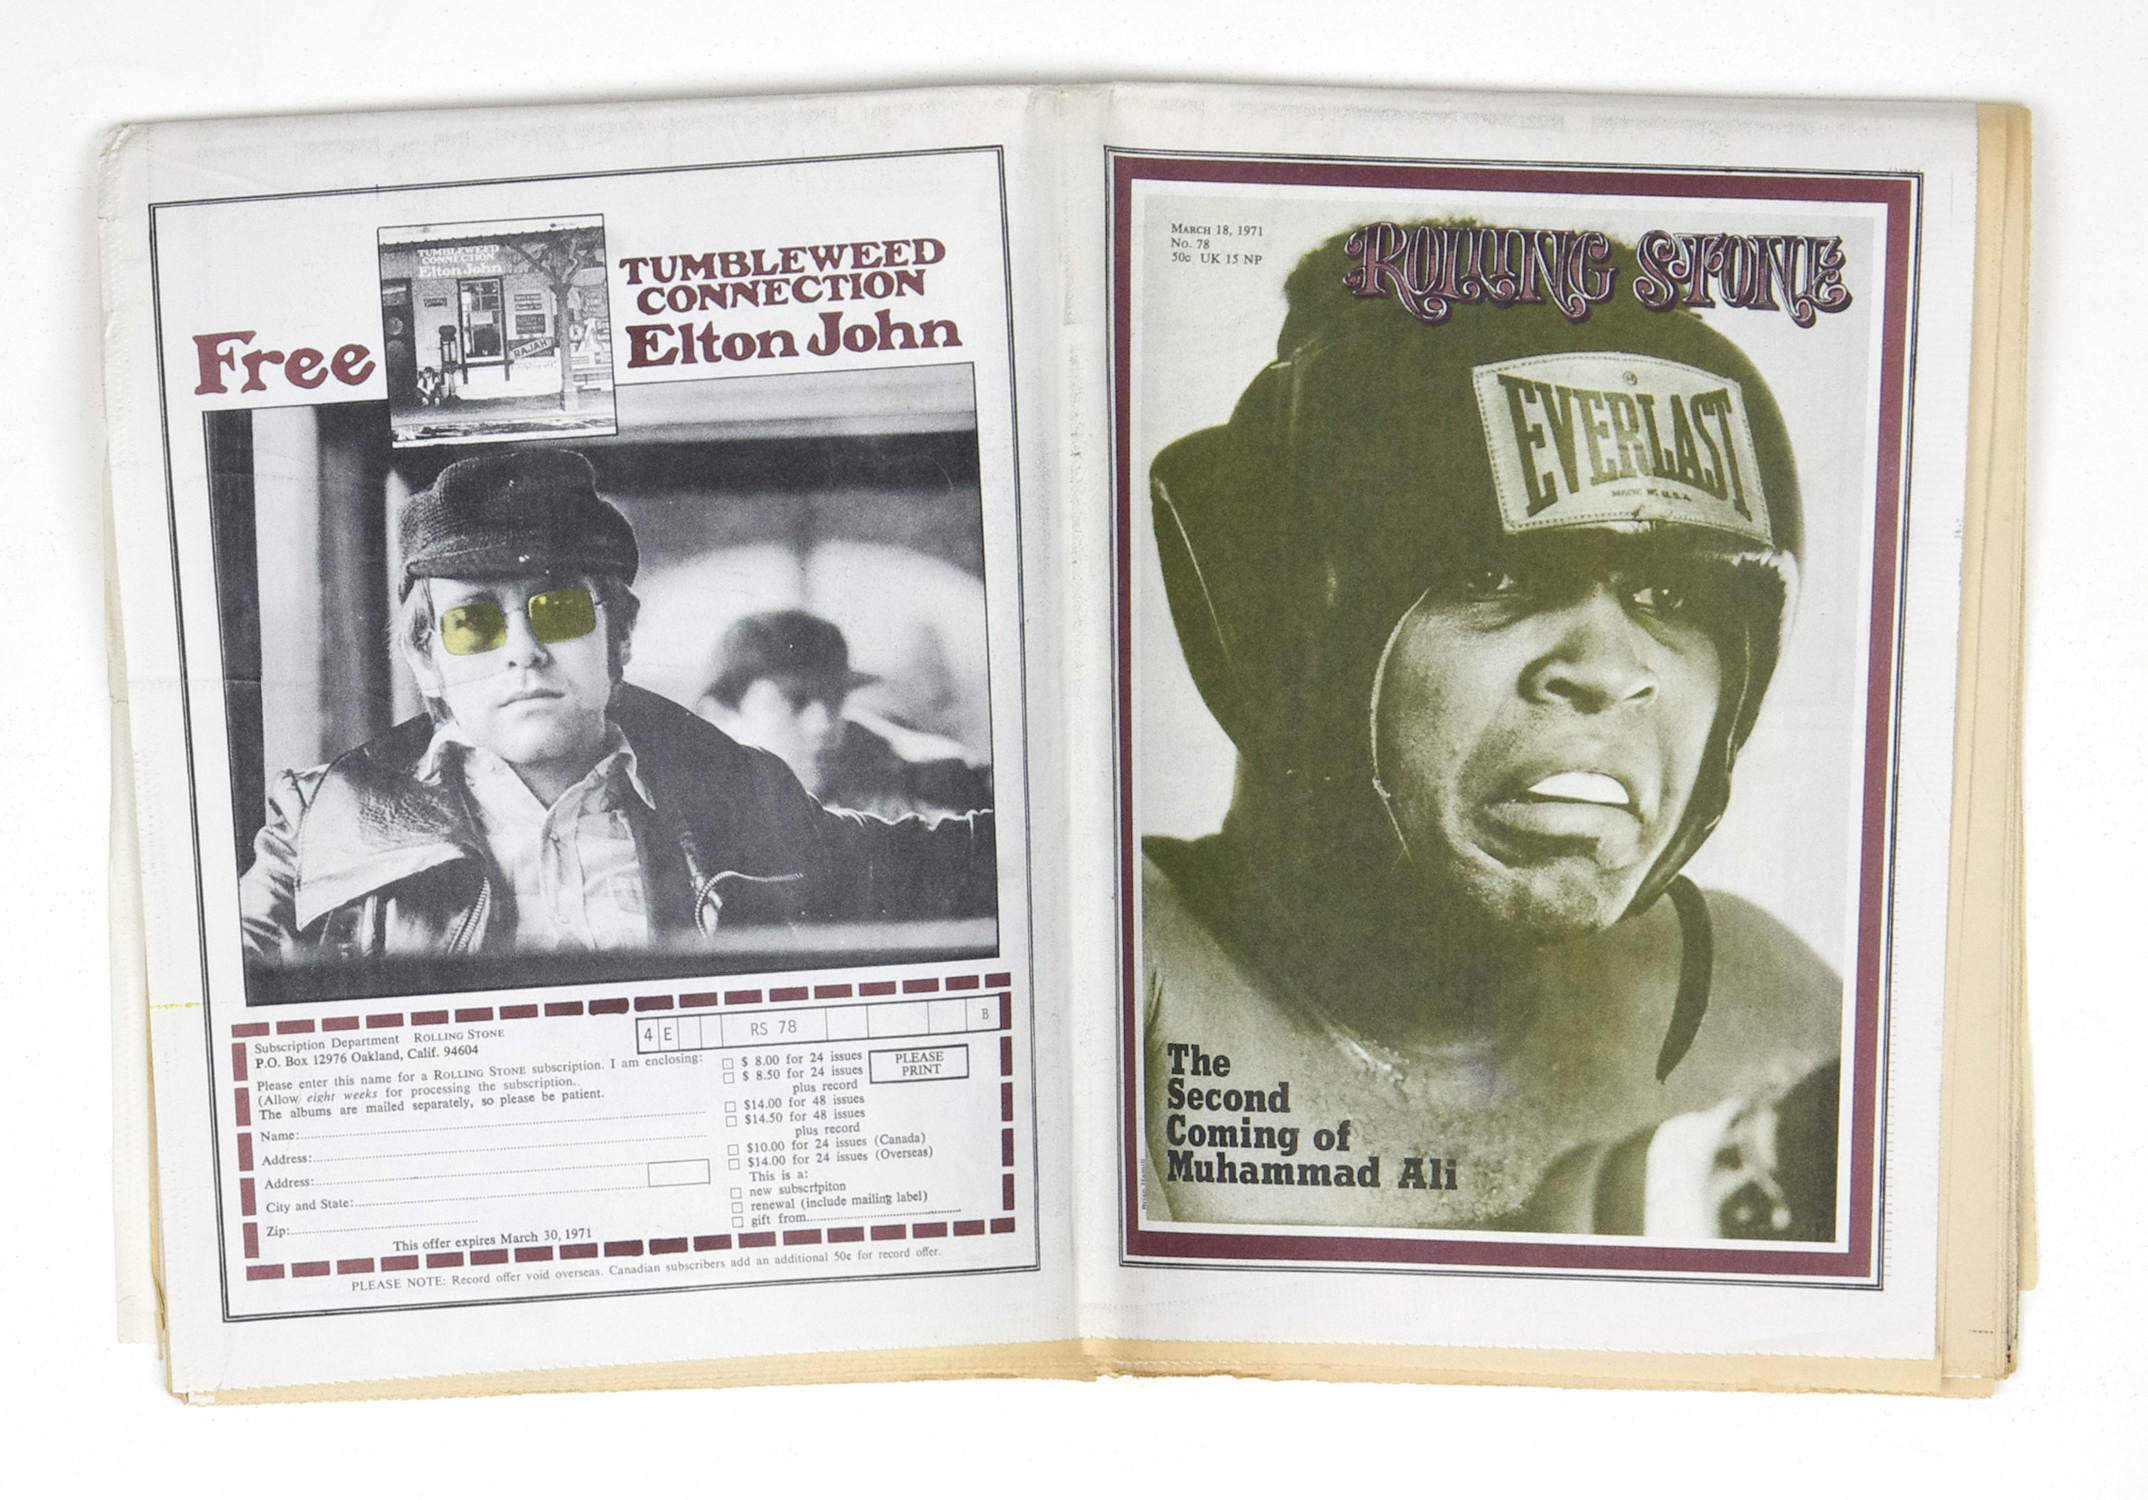 Rolling Stone Magazine Back Issue 1971 Mar 18 No.78 Muhammad Ali 